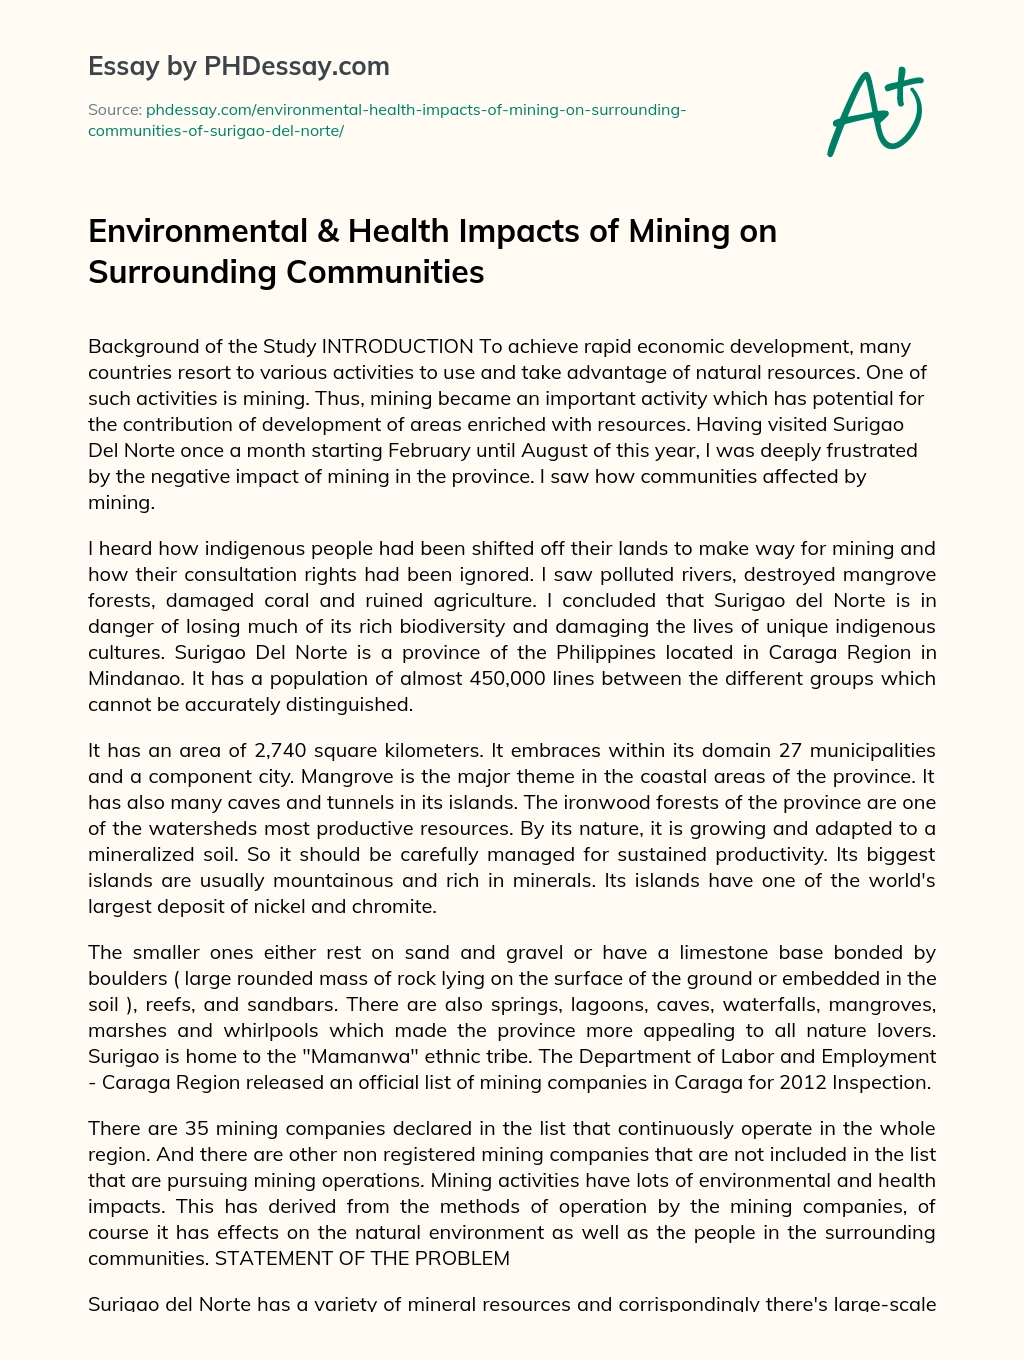 Environmental & Health Impacts of Mining on Surrounding Communities essay